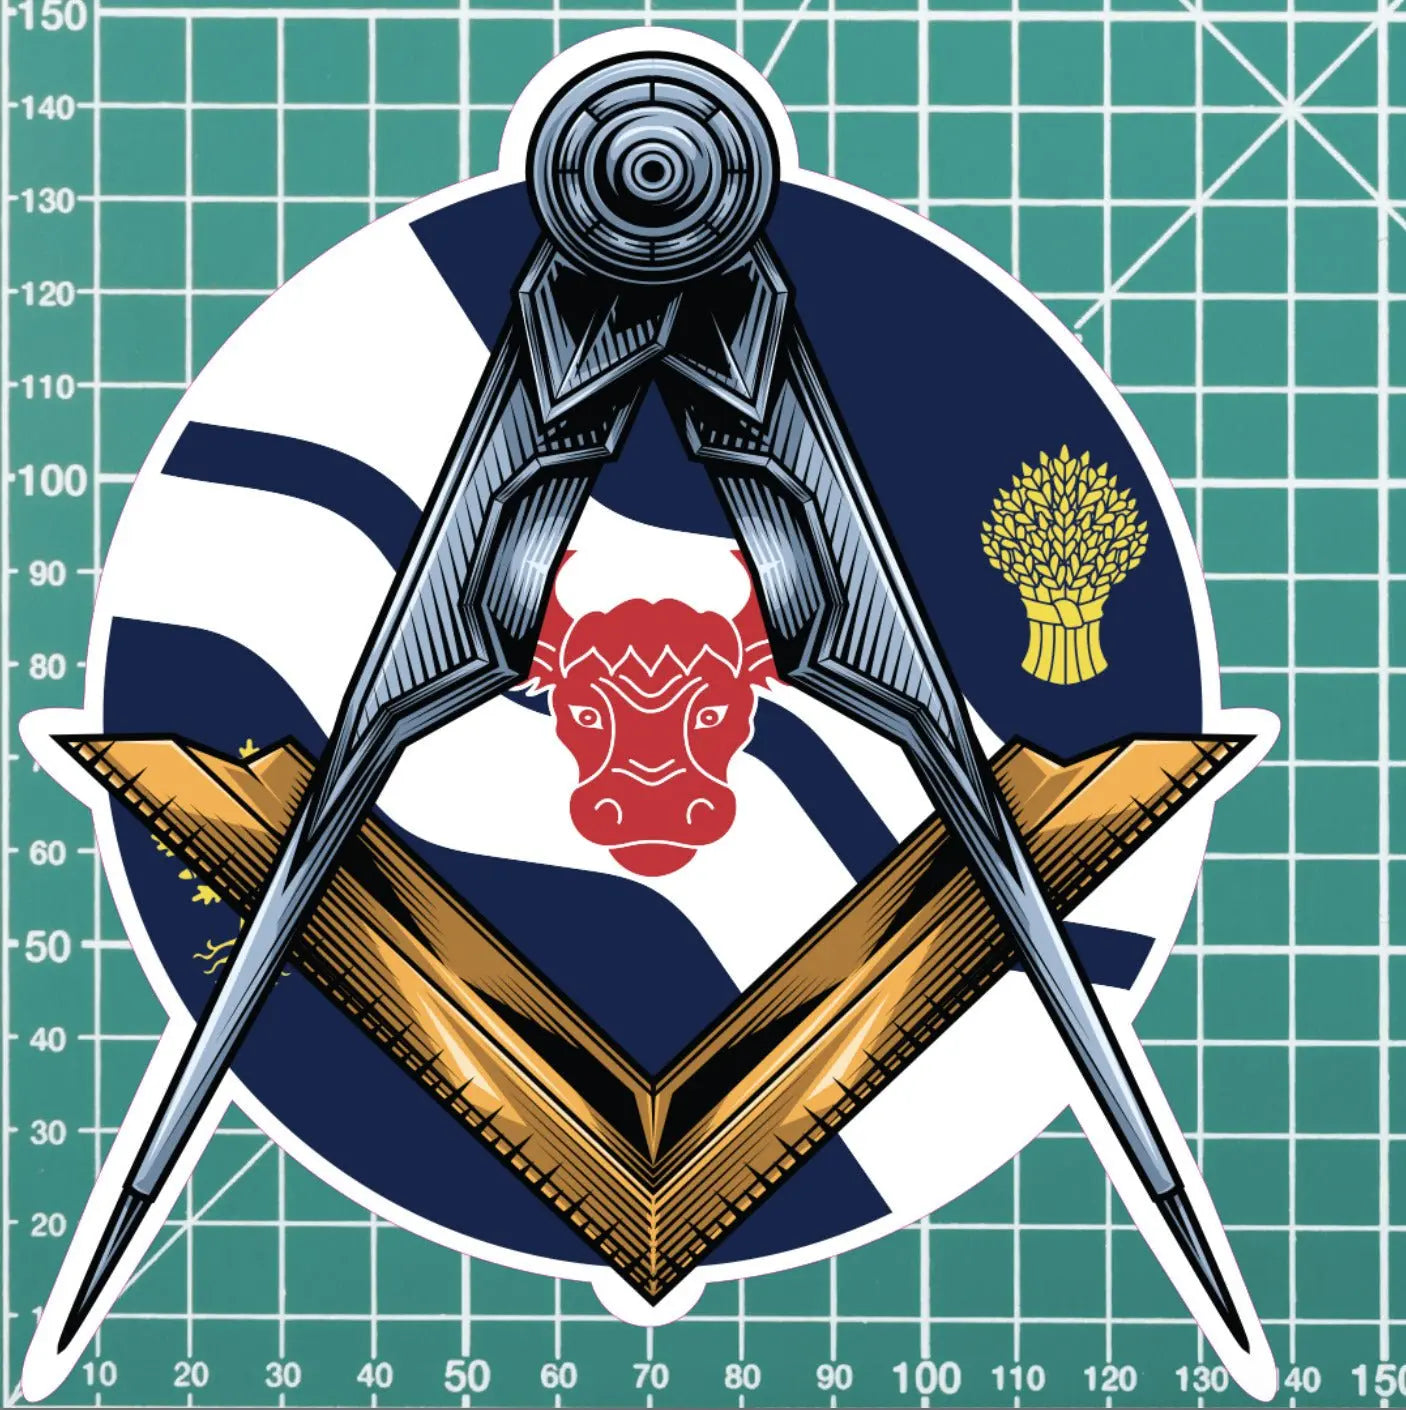 Round Oxfordshire Masonic Sticker Square & Compass Union Vinyl Decal redplume